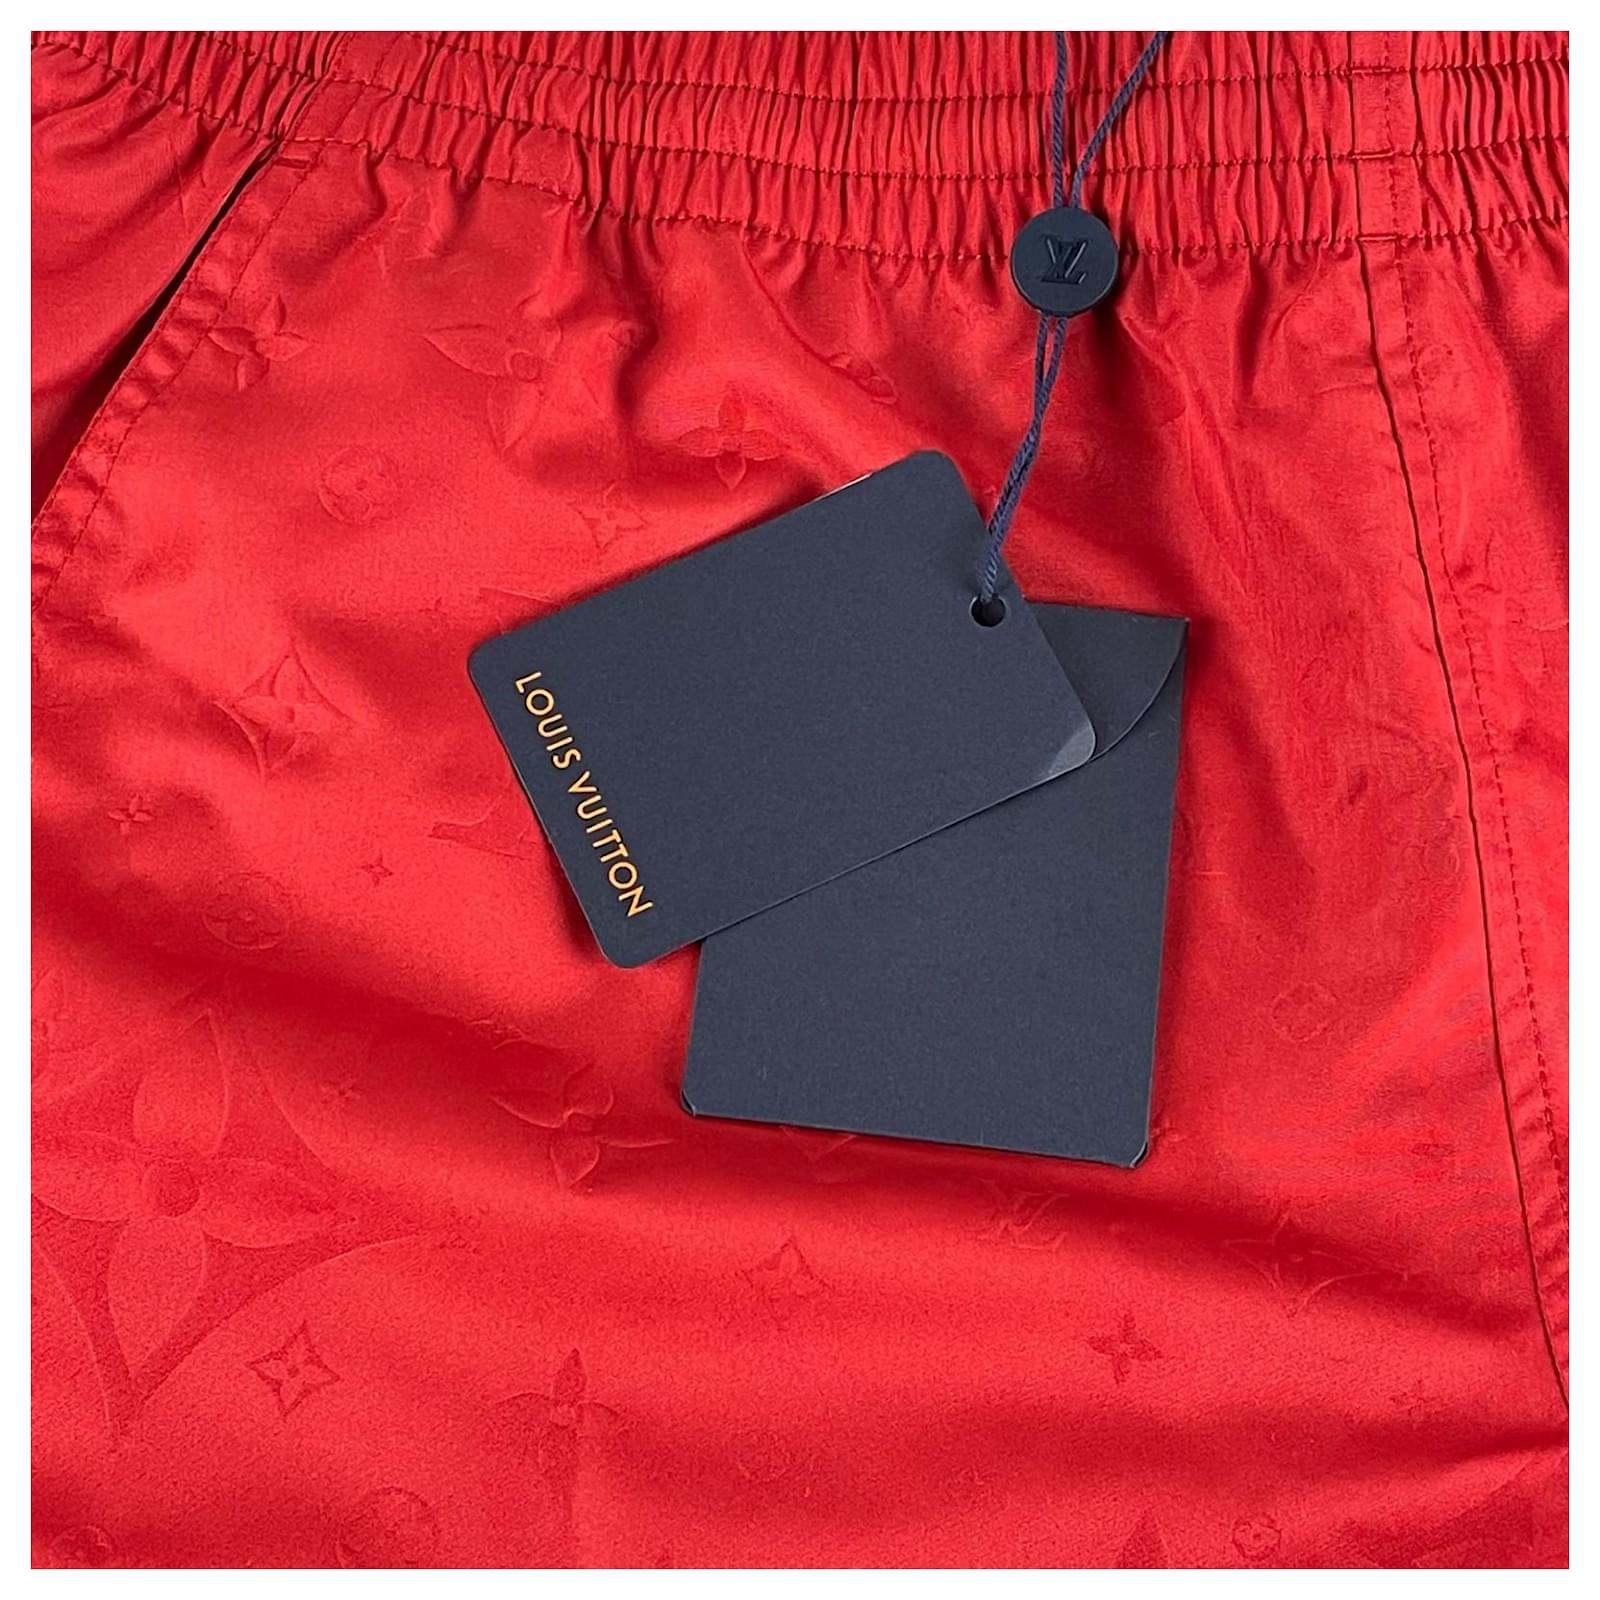 Cix Brand Louis Vuitton Men's Swimming Beach Shorts Wholesale